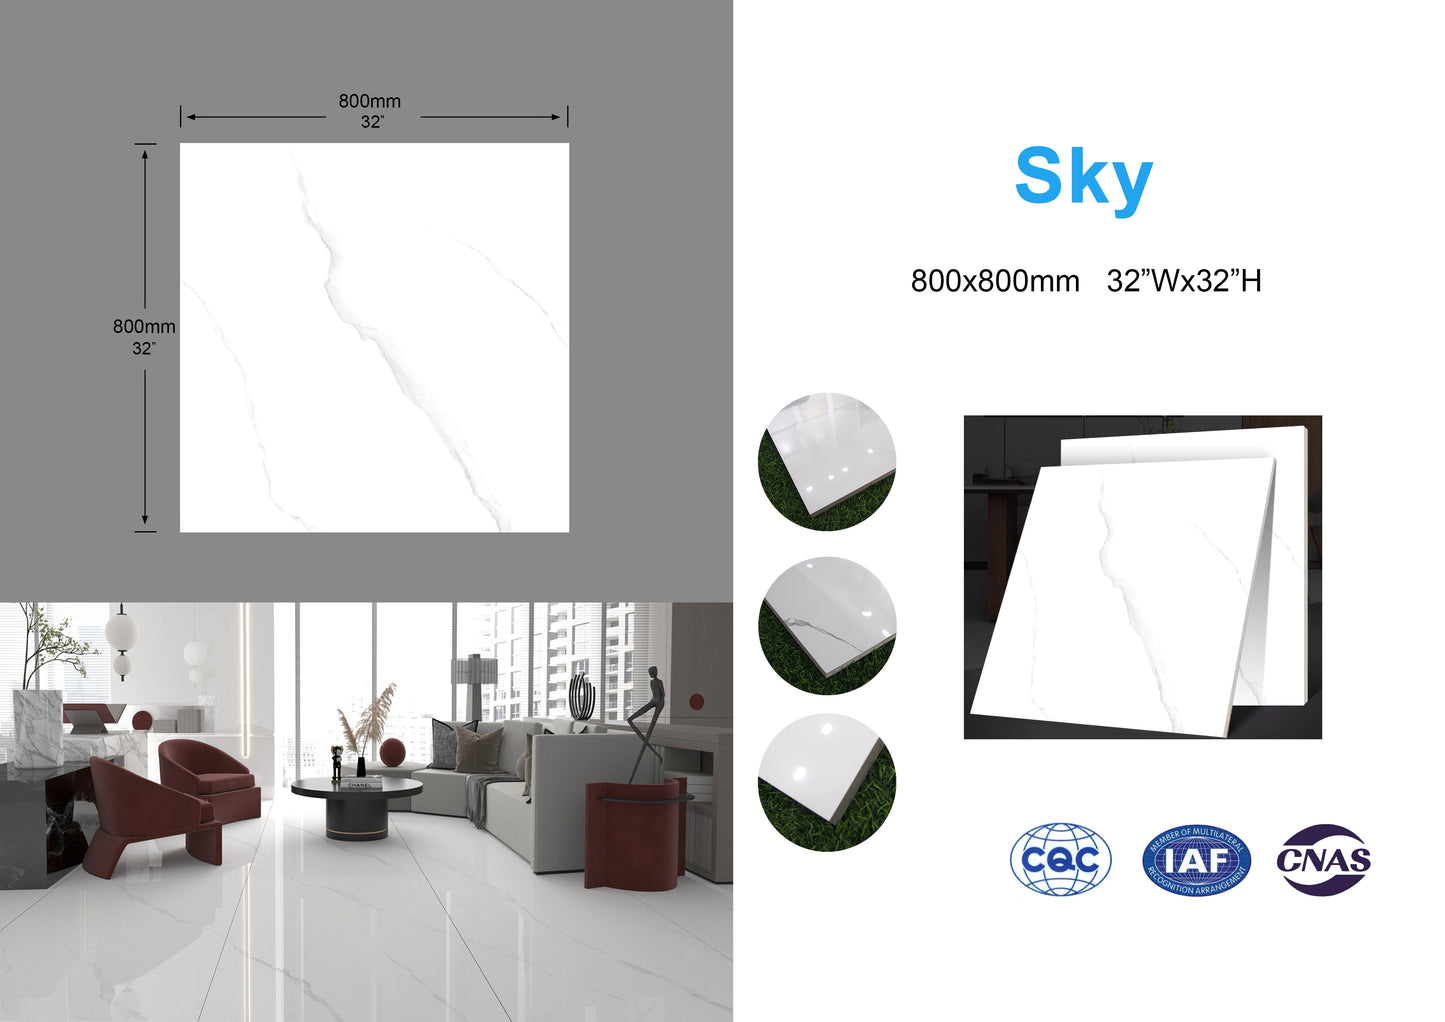 Sky family Full Polished Glazed Tile 32"x32" 3pcs/box 21.33sf/box $1.59/sf (15 days return/exchange) Bulk Deal 1000sf+ $1.39/SF(No return/no exchange)